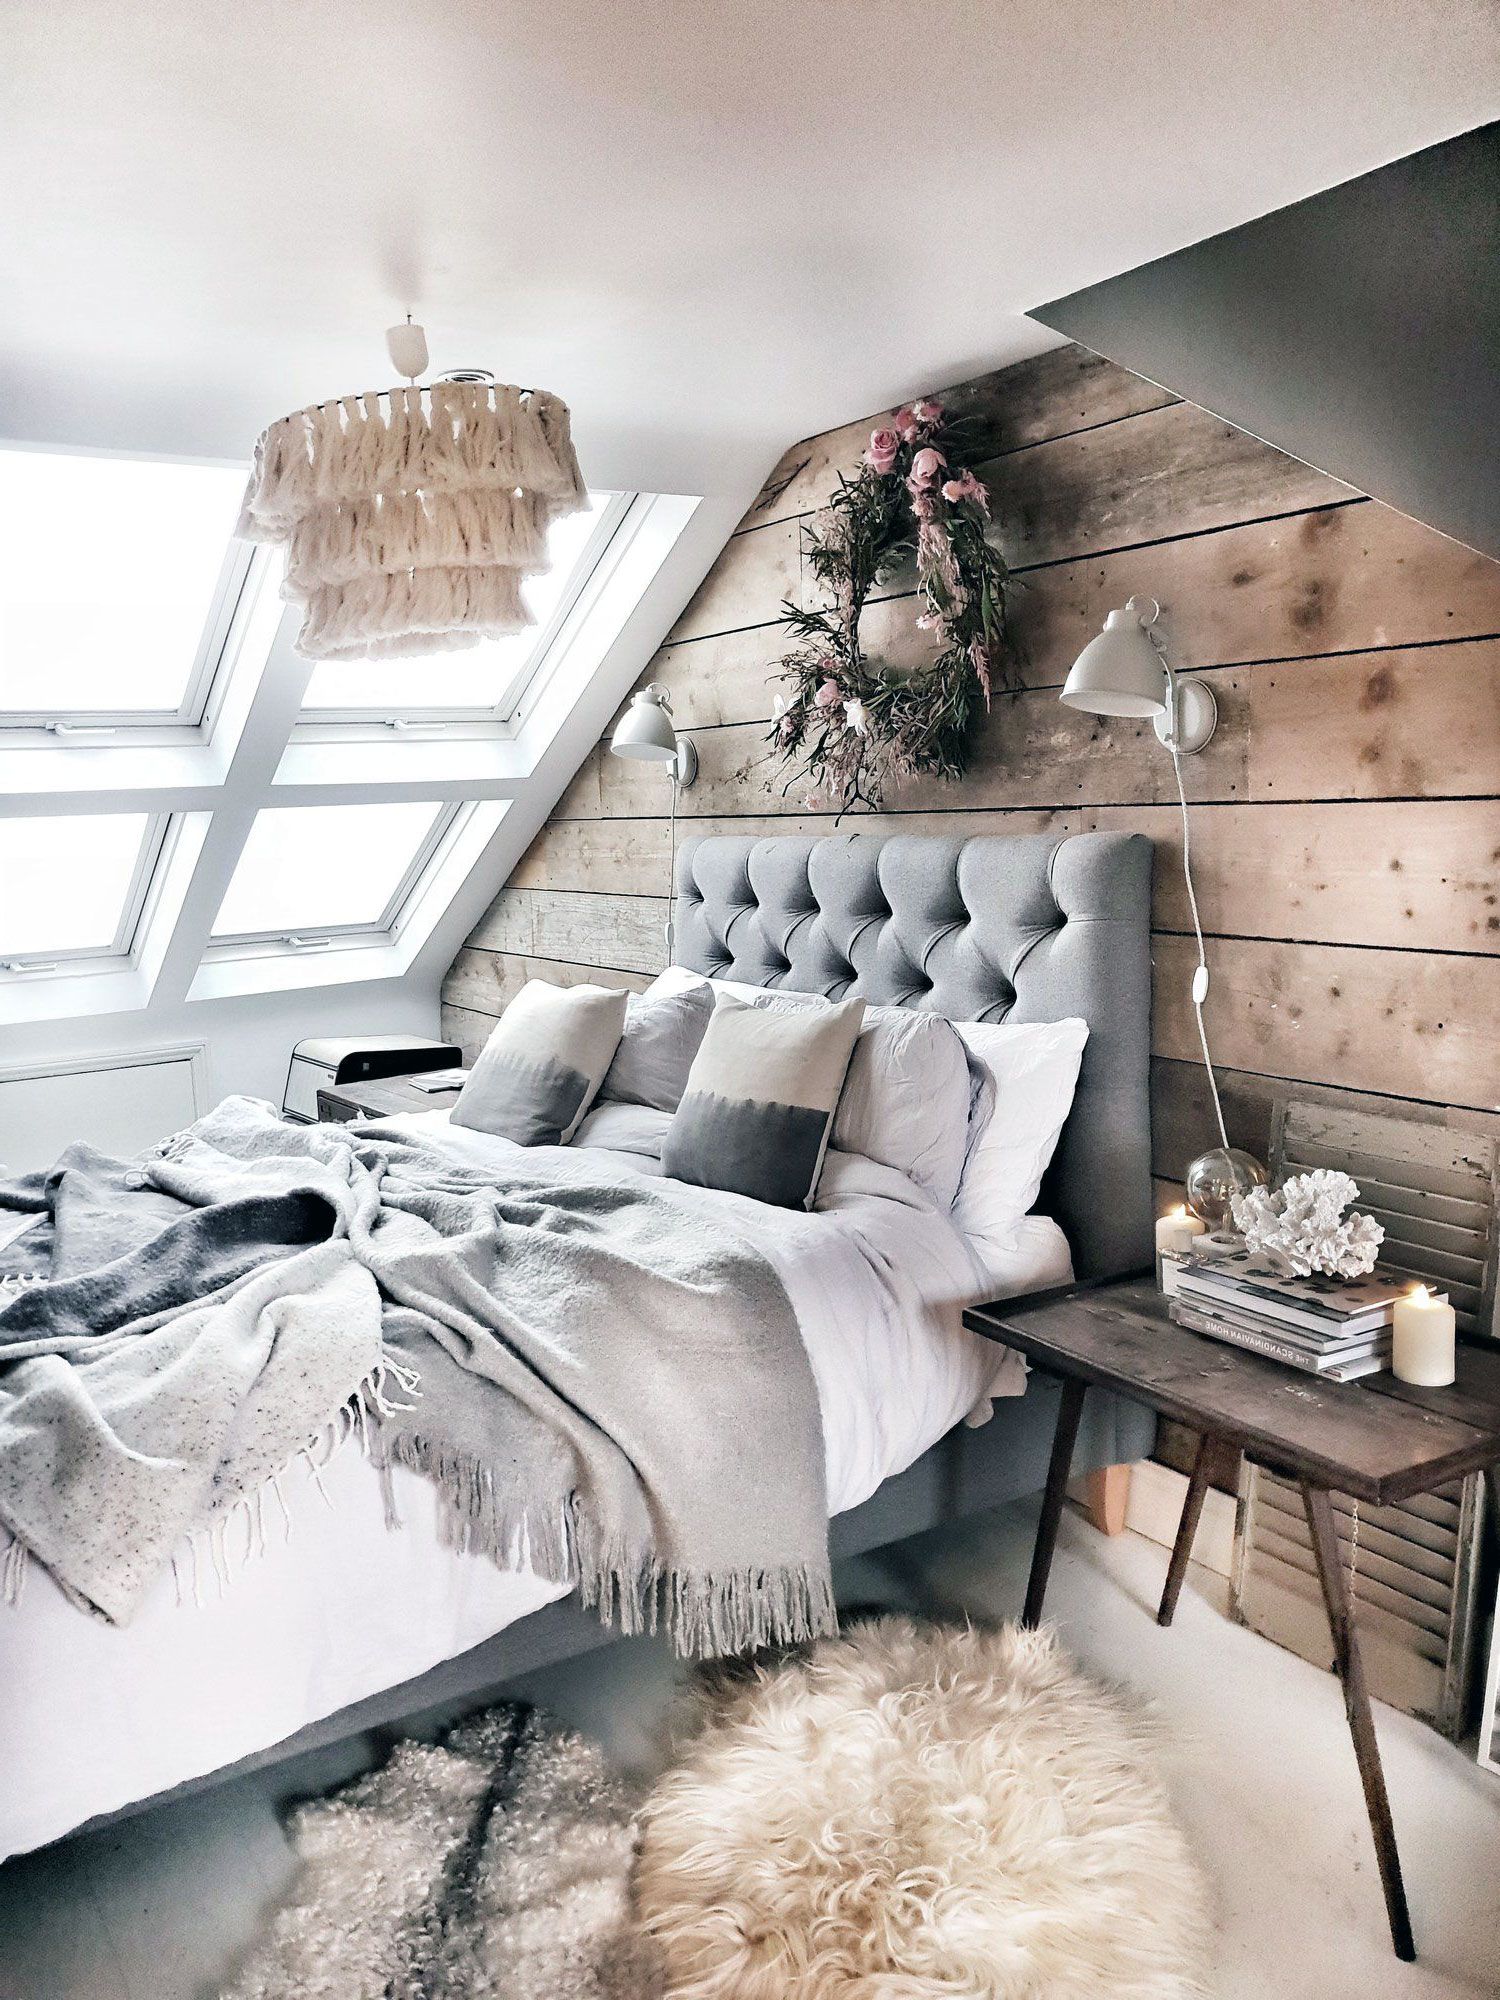 small bedroom